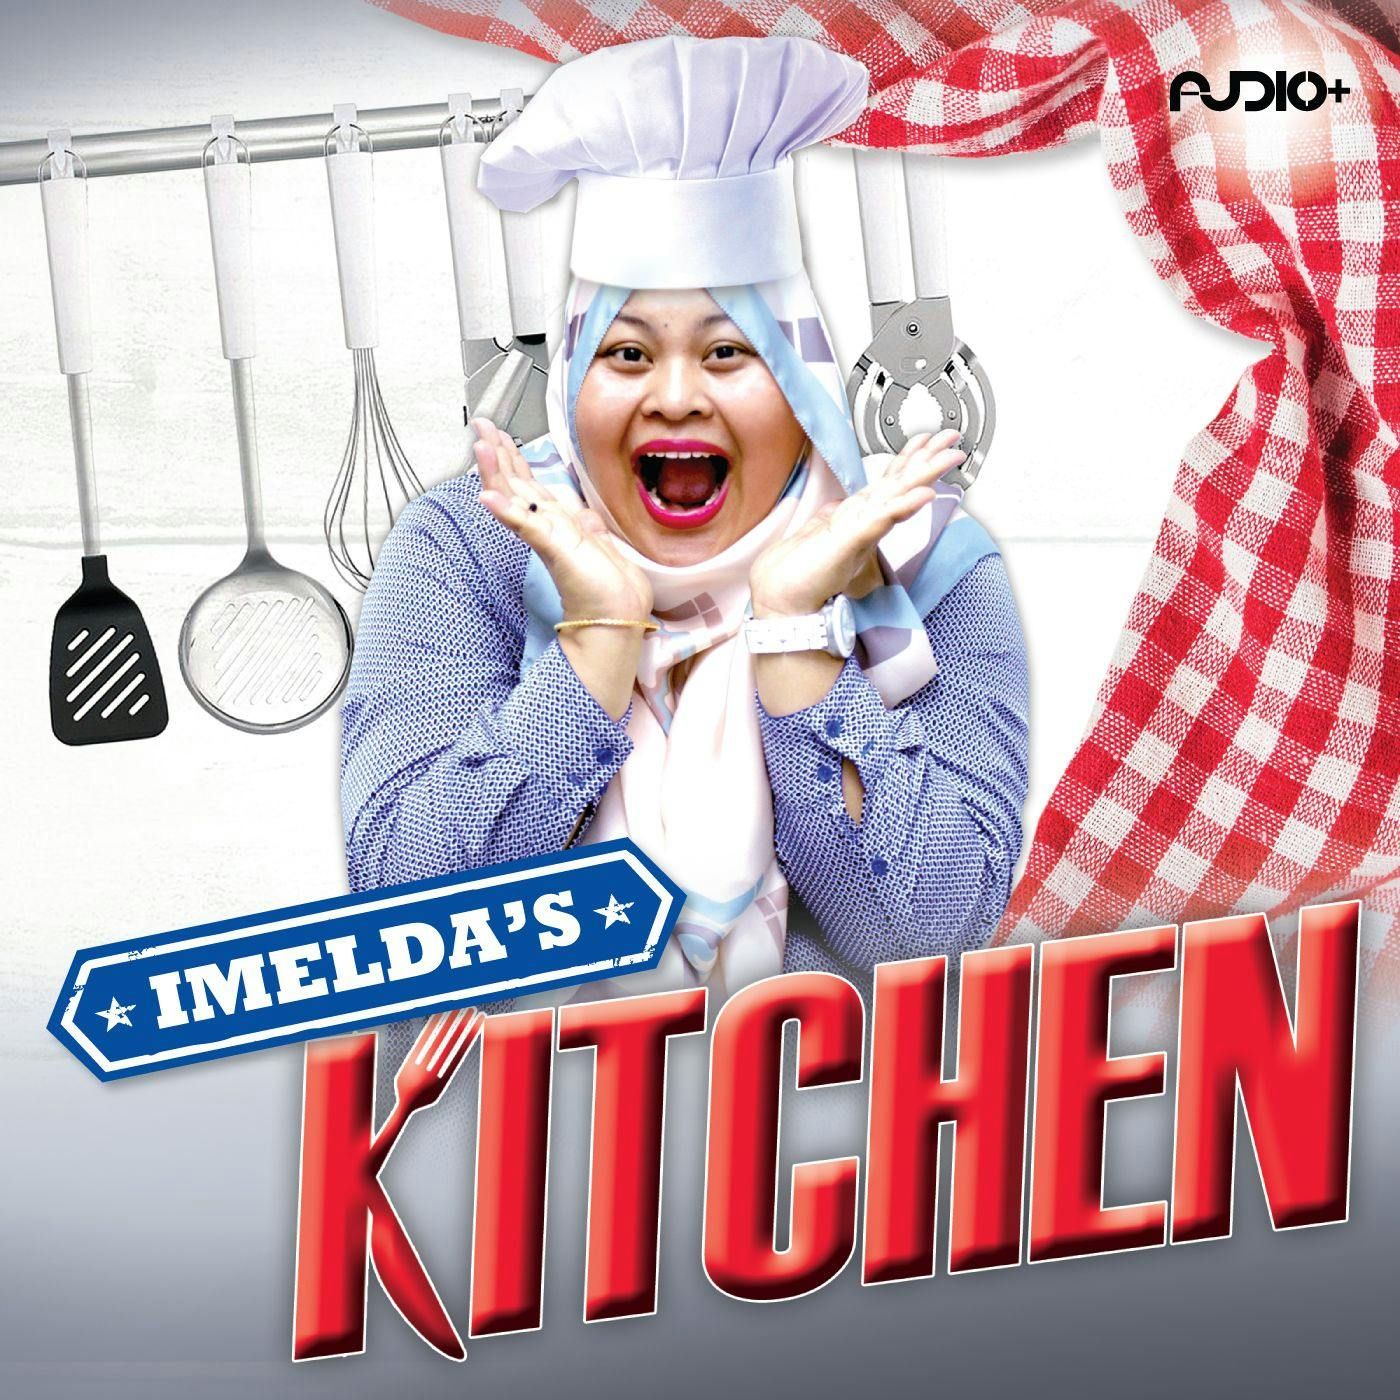 Episode 04 - Laksa Mana? : Imelda's Kitchen